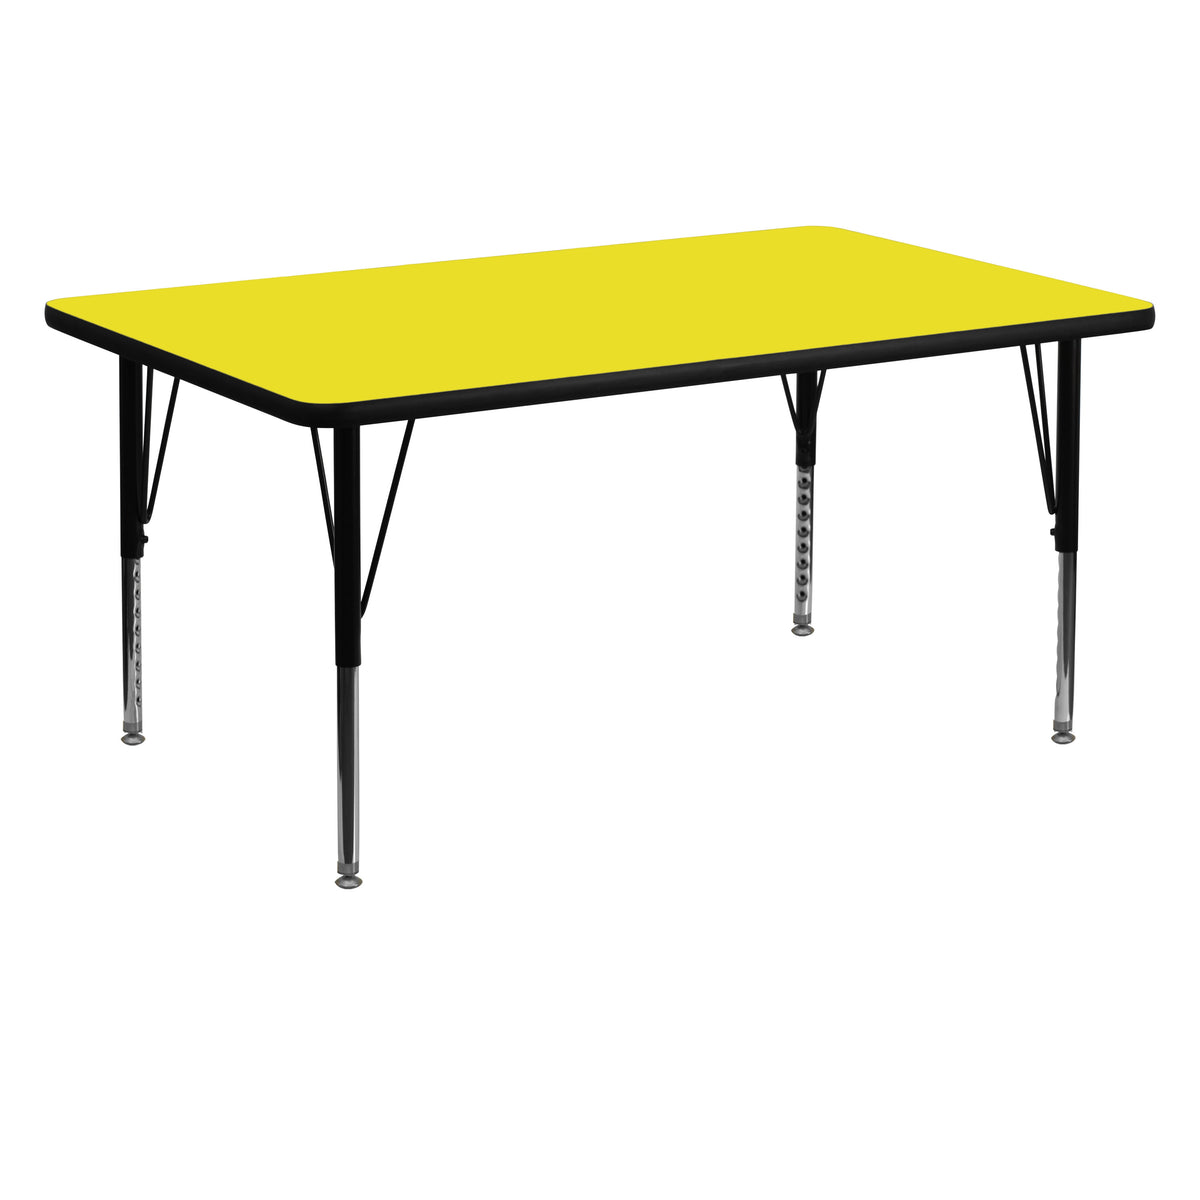 Yellow |#| 30inchW x 60inchL Rectangular Yellow HP Laminate Adjustable Activity Table